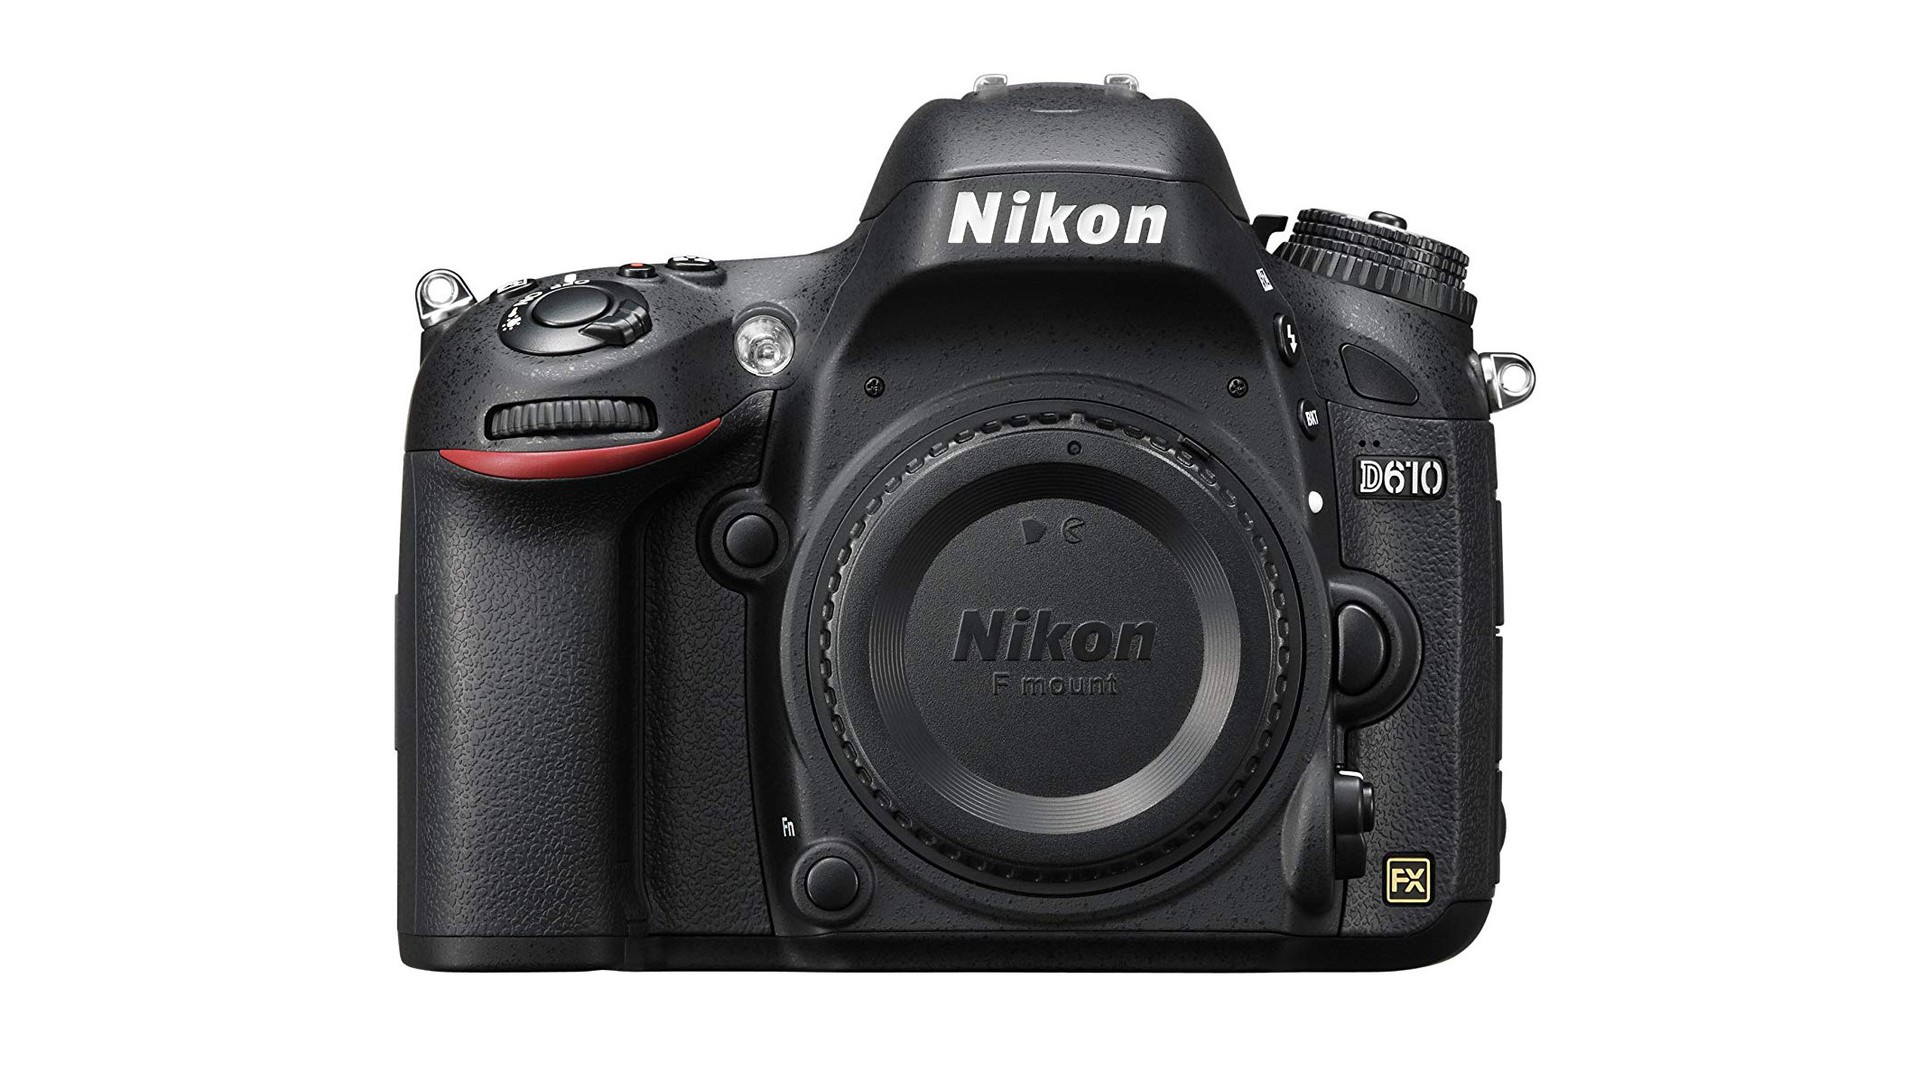 Nikon D610 DSLR camera body